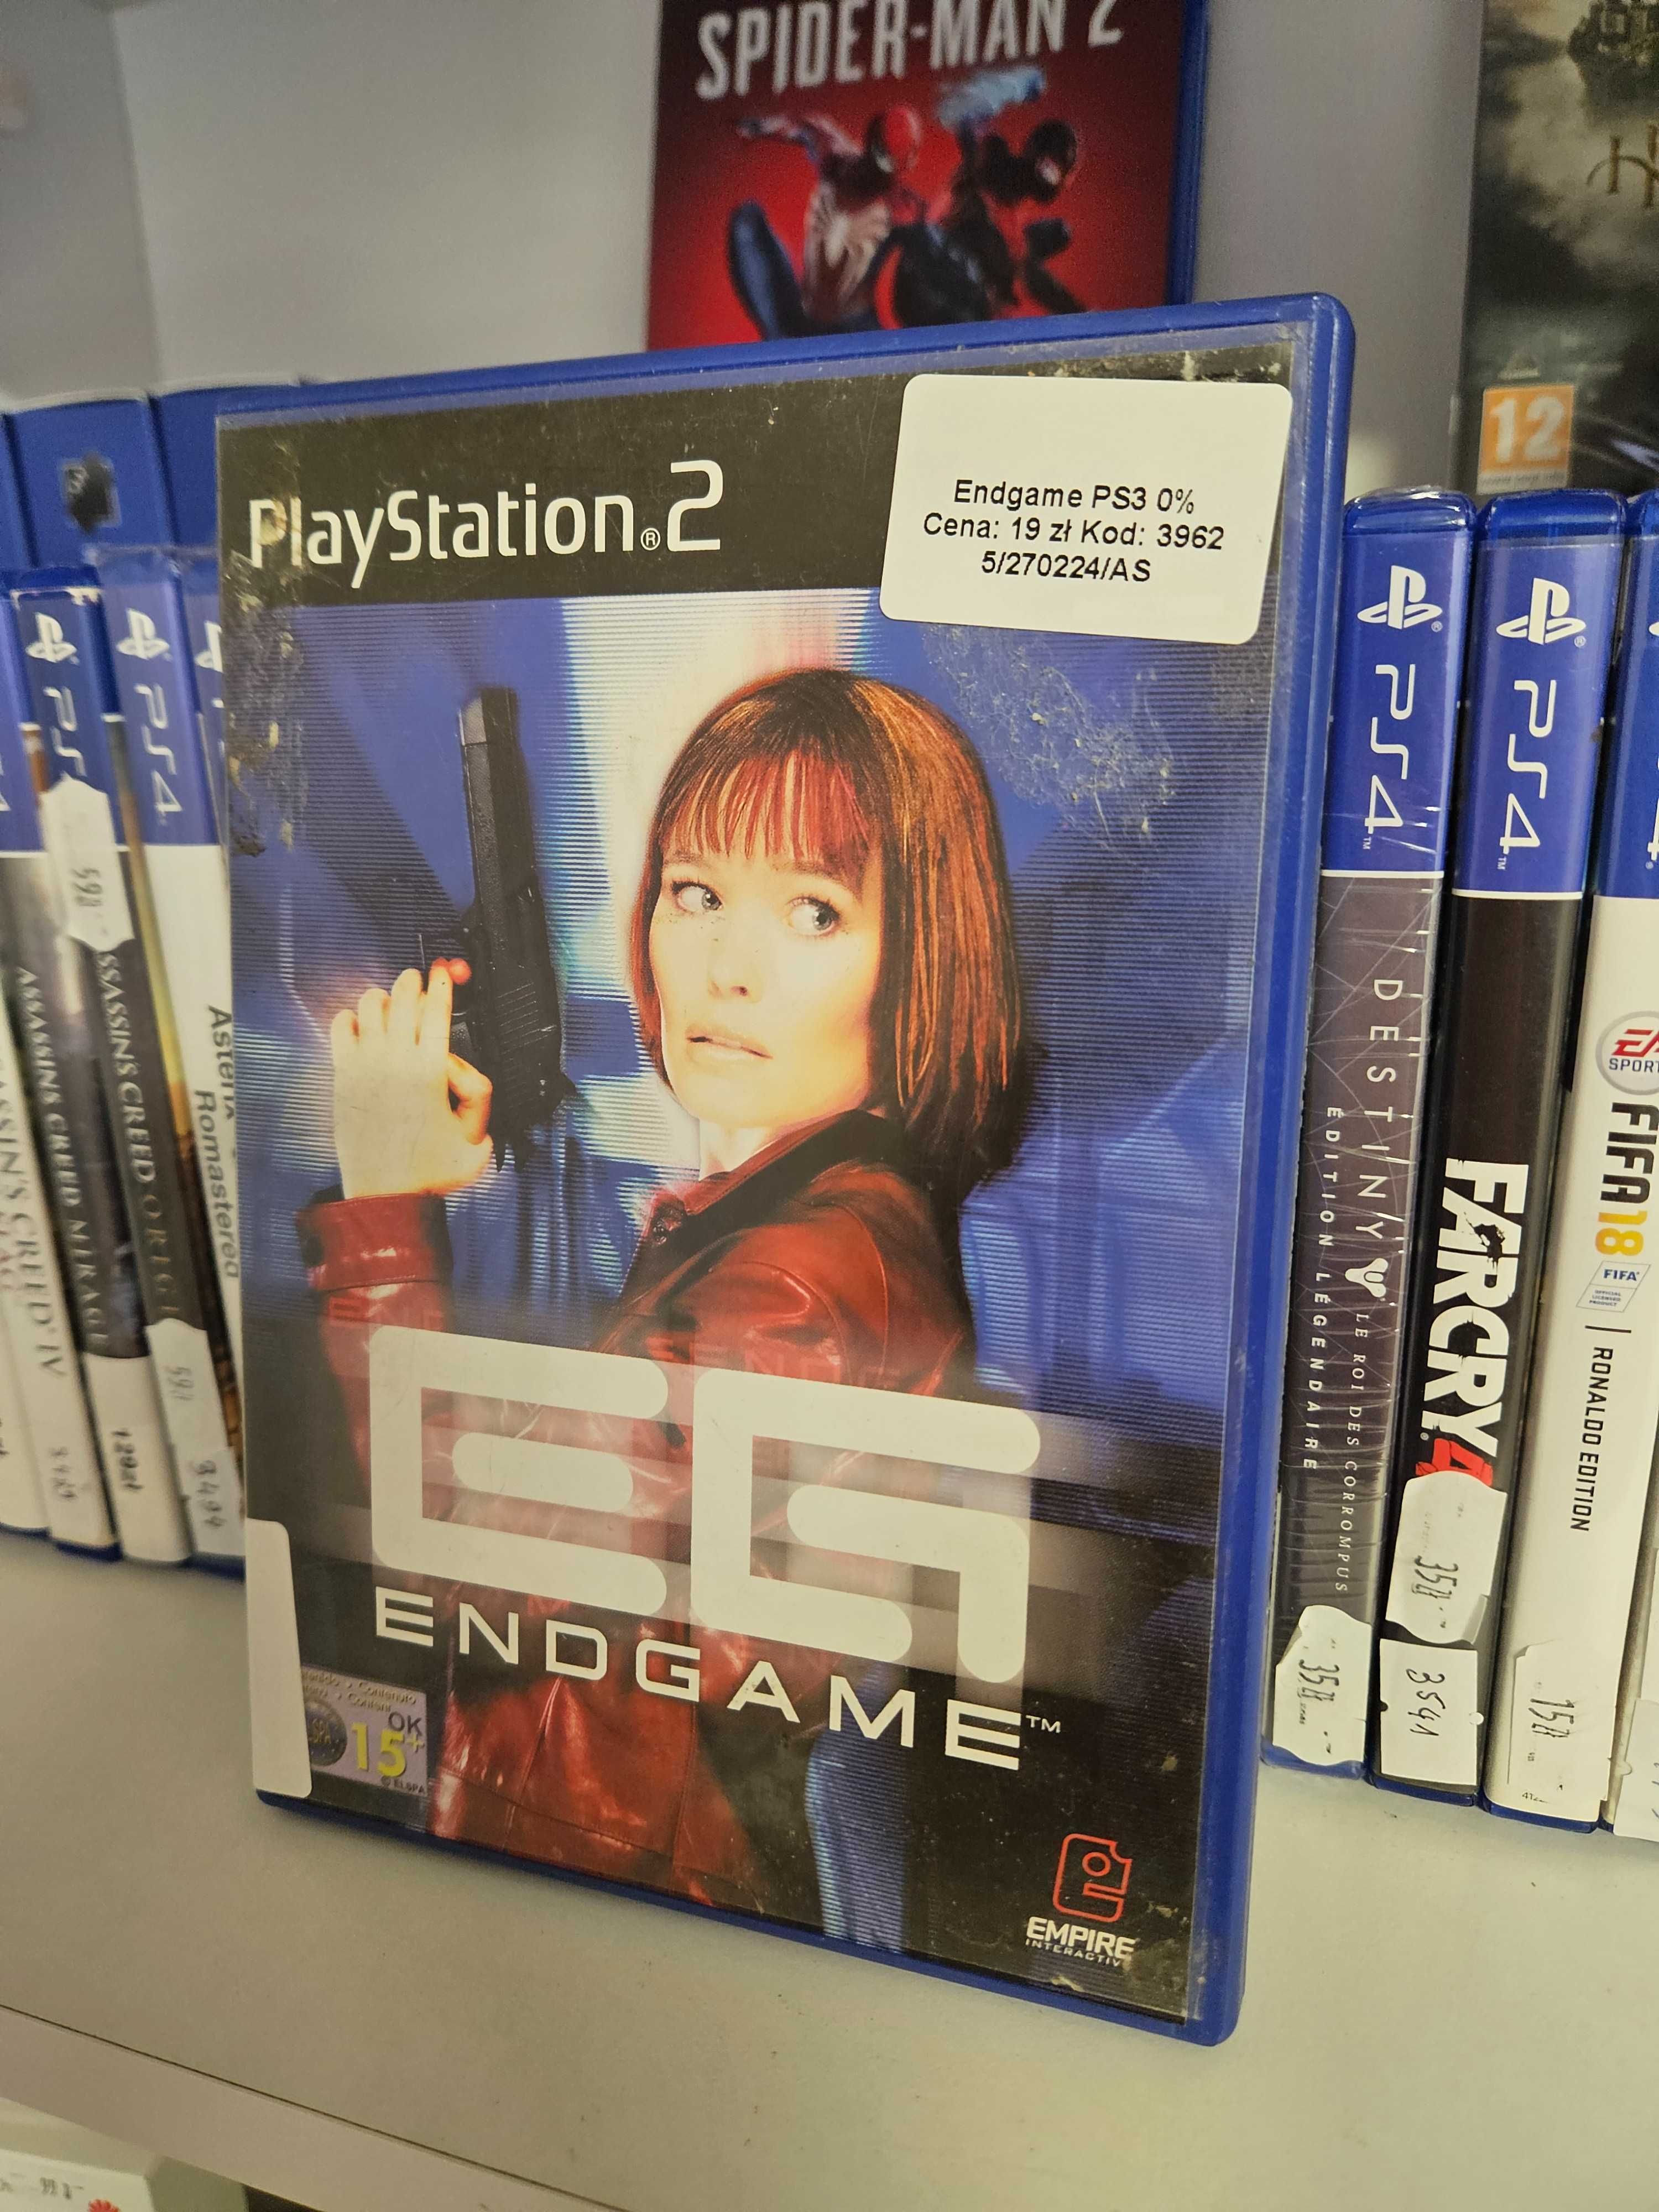 Endgame PS2 - As Game & GSM - 3962